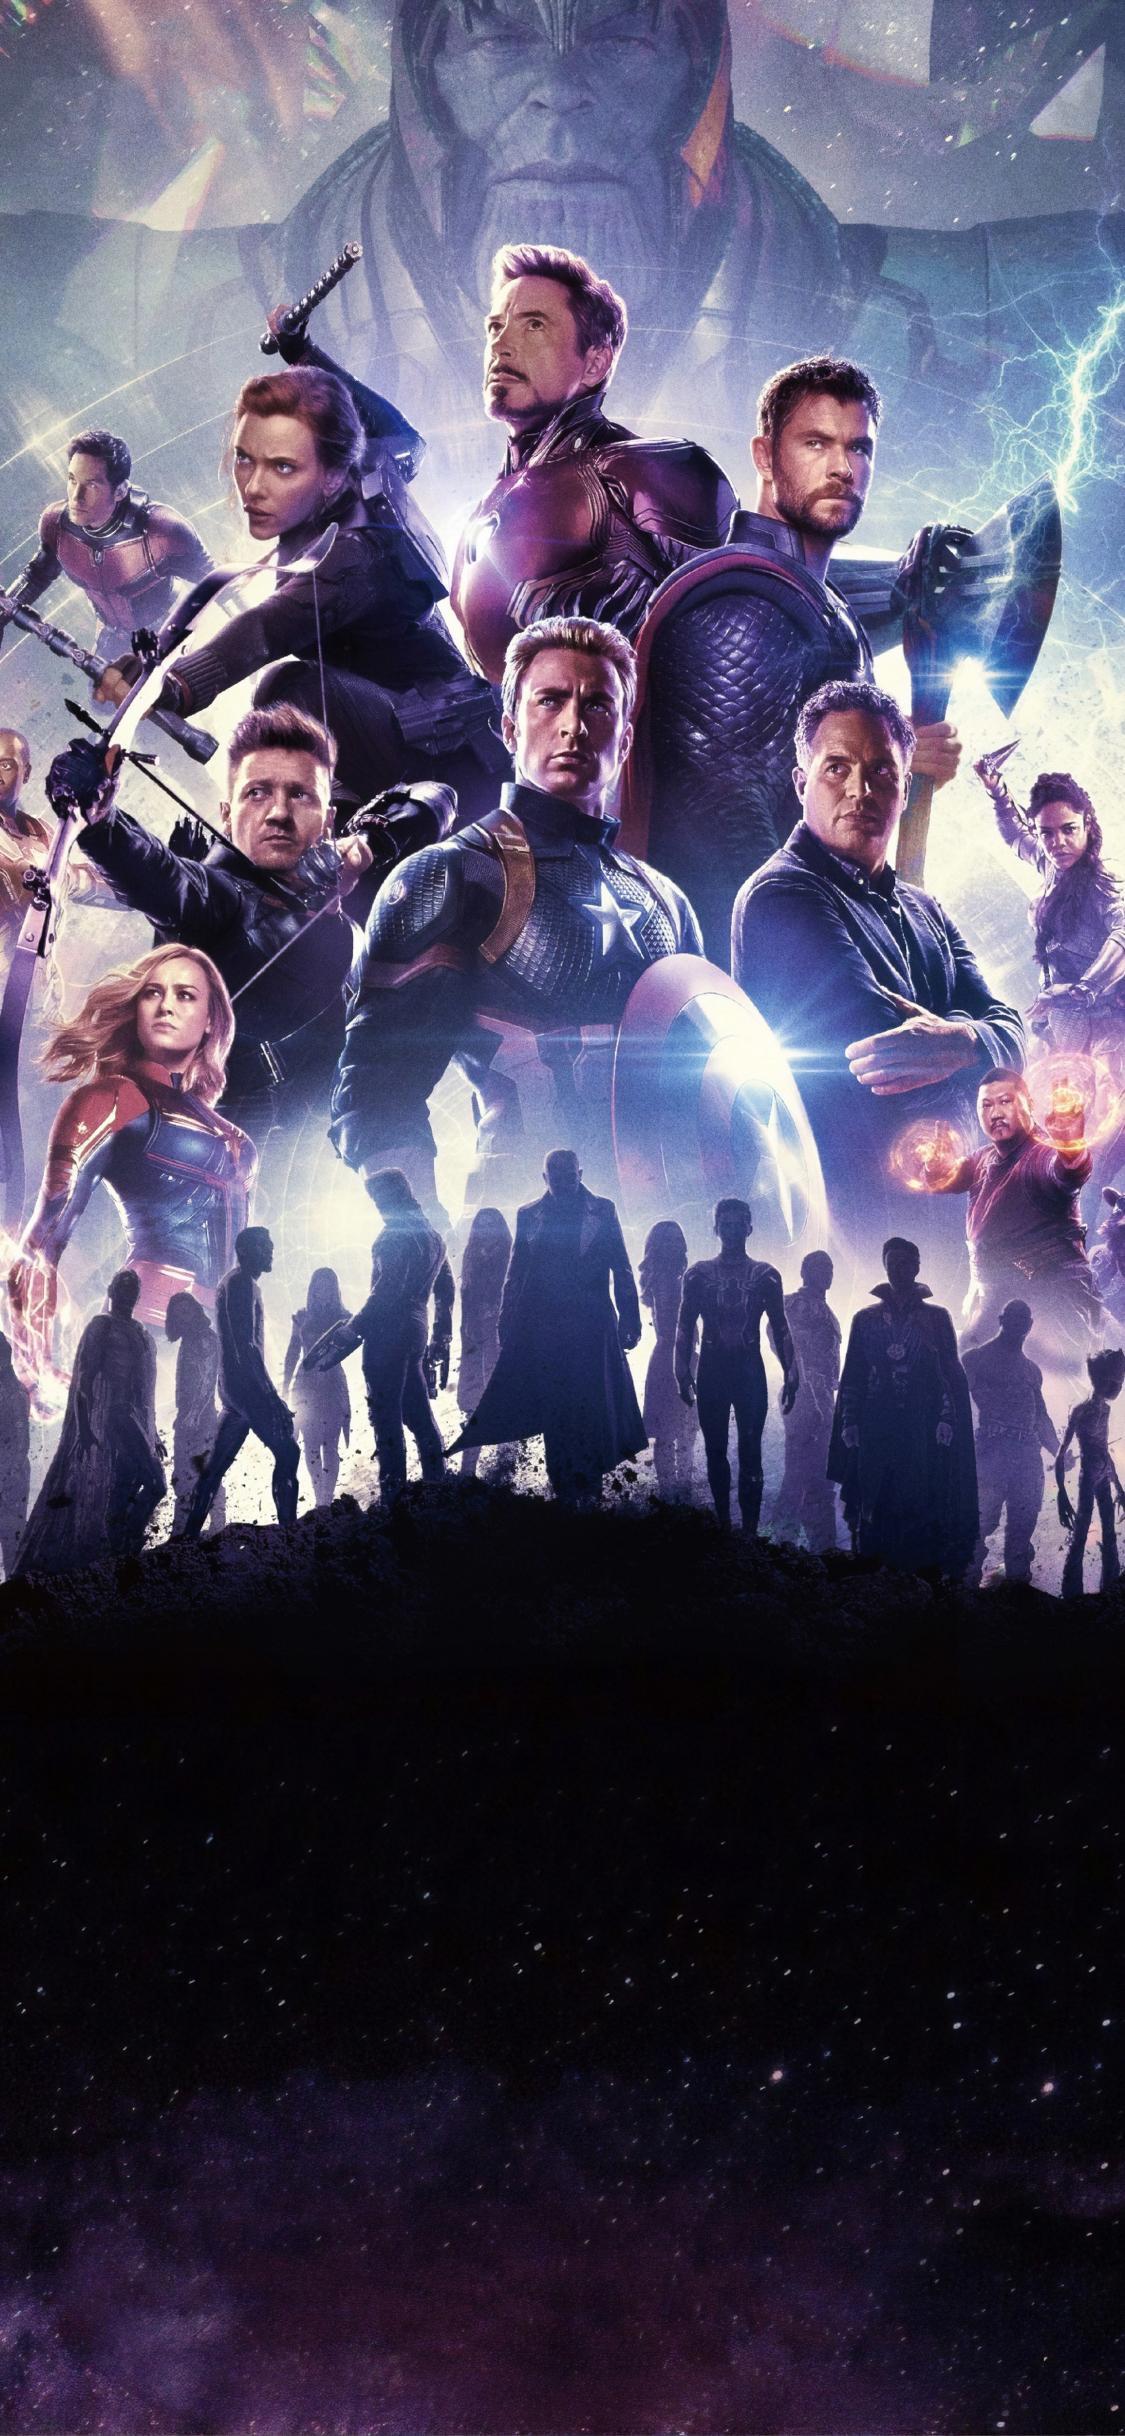 Avengers Endgame International Poster iPhone XS